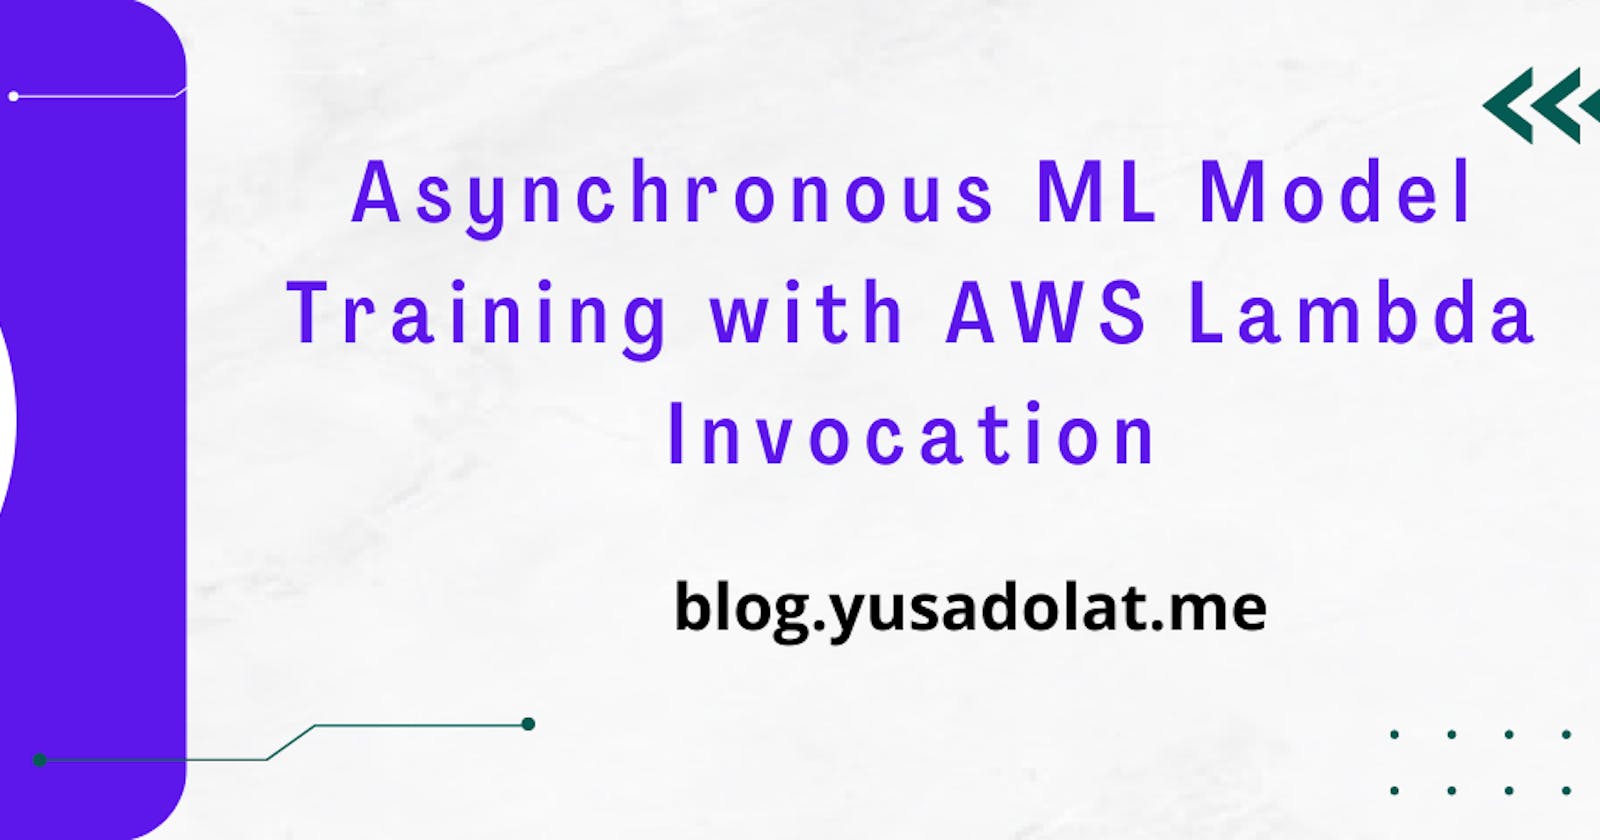 Asynchronous ML Model Training with AWS Lambda Invocation